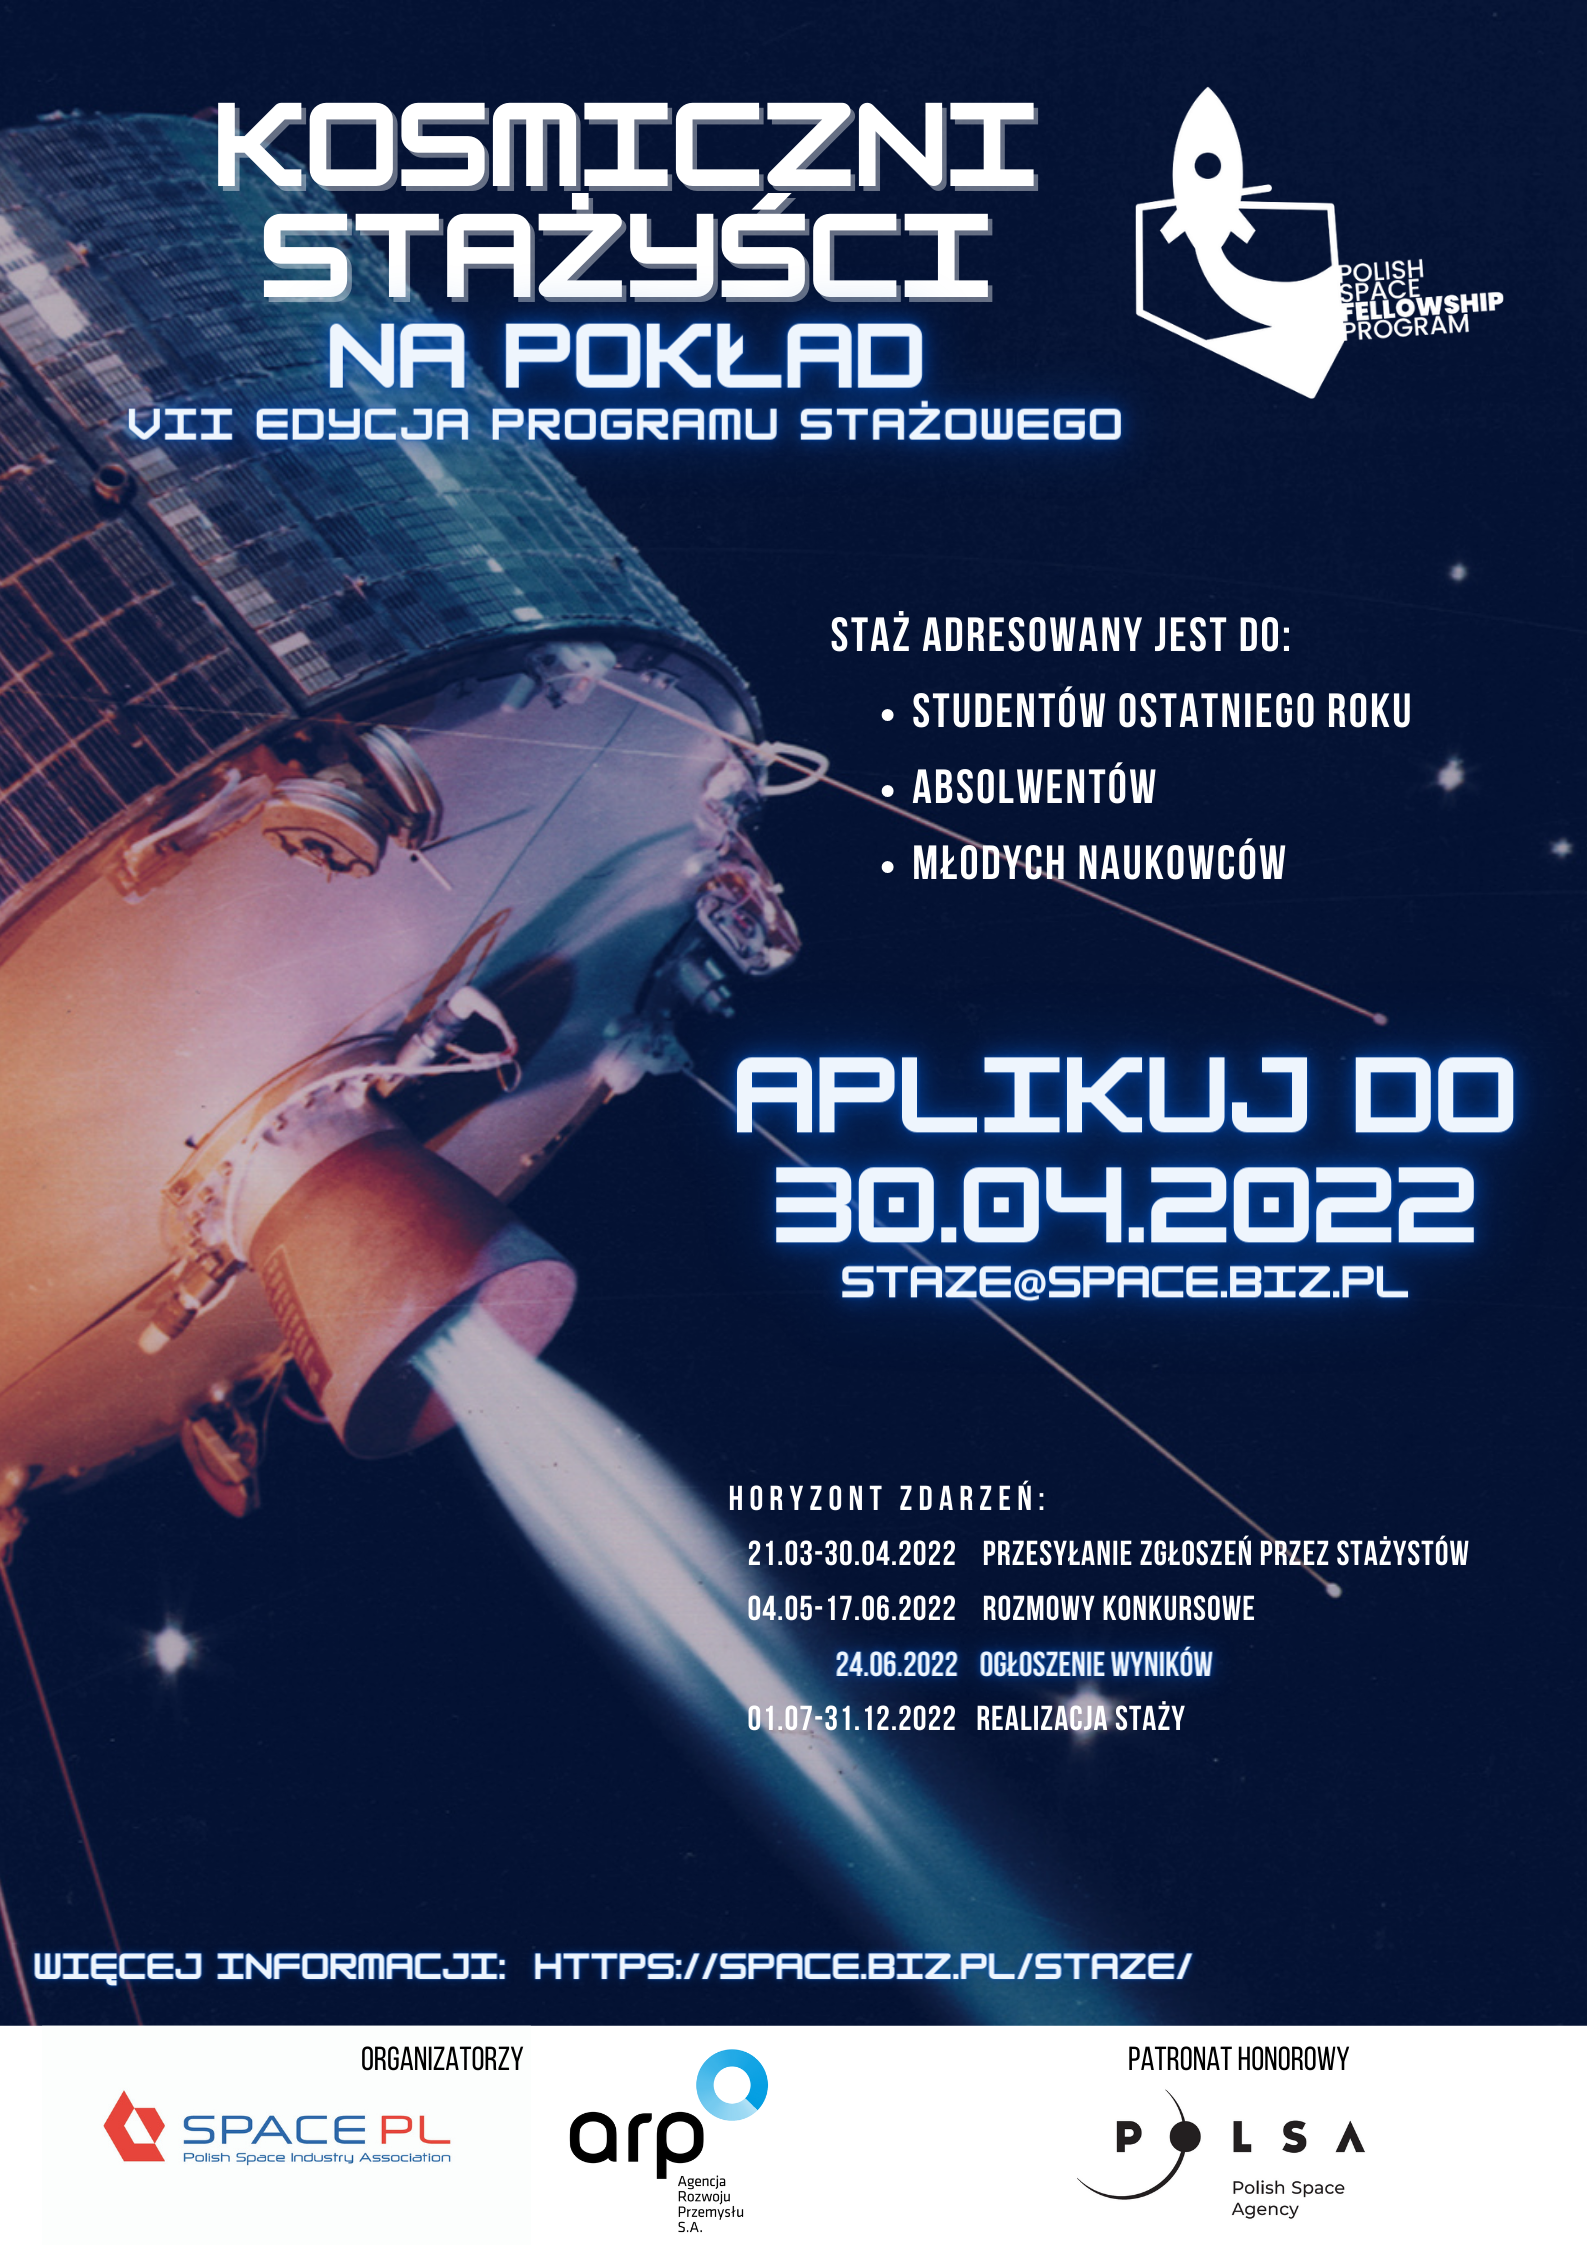 Polish Space Fellowship Program